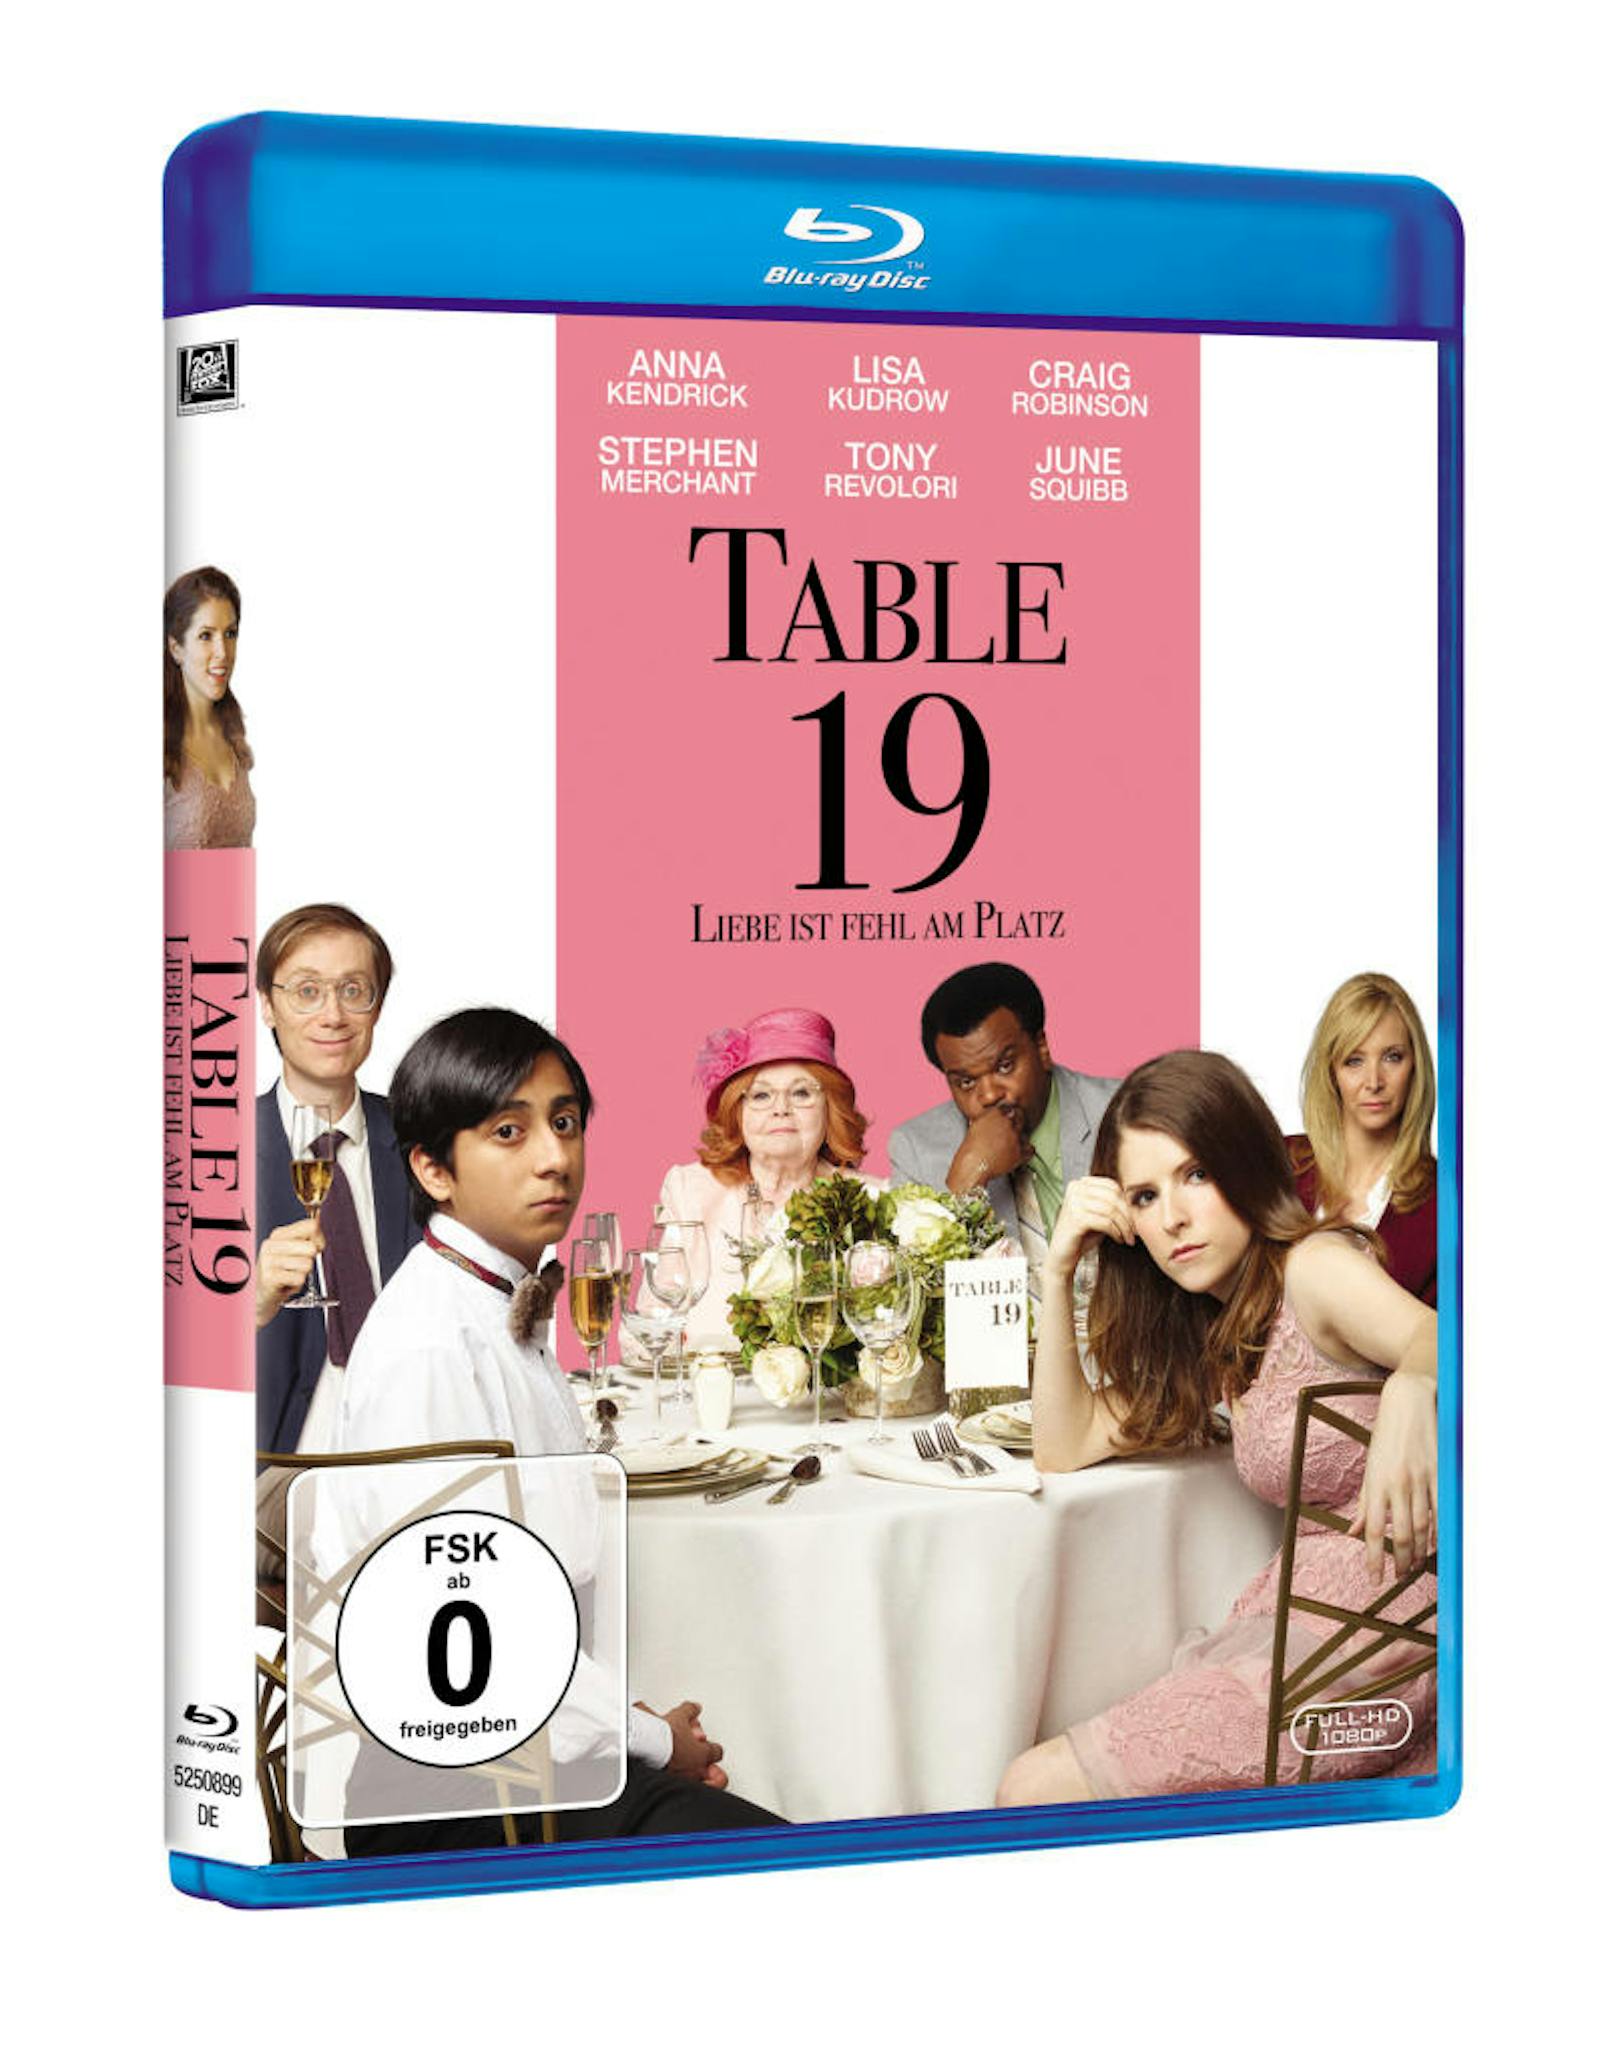 "Table 19 - Liebe ist fehl am Platz"-Blu-ray